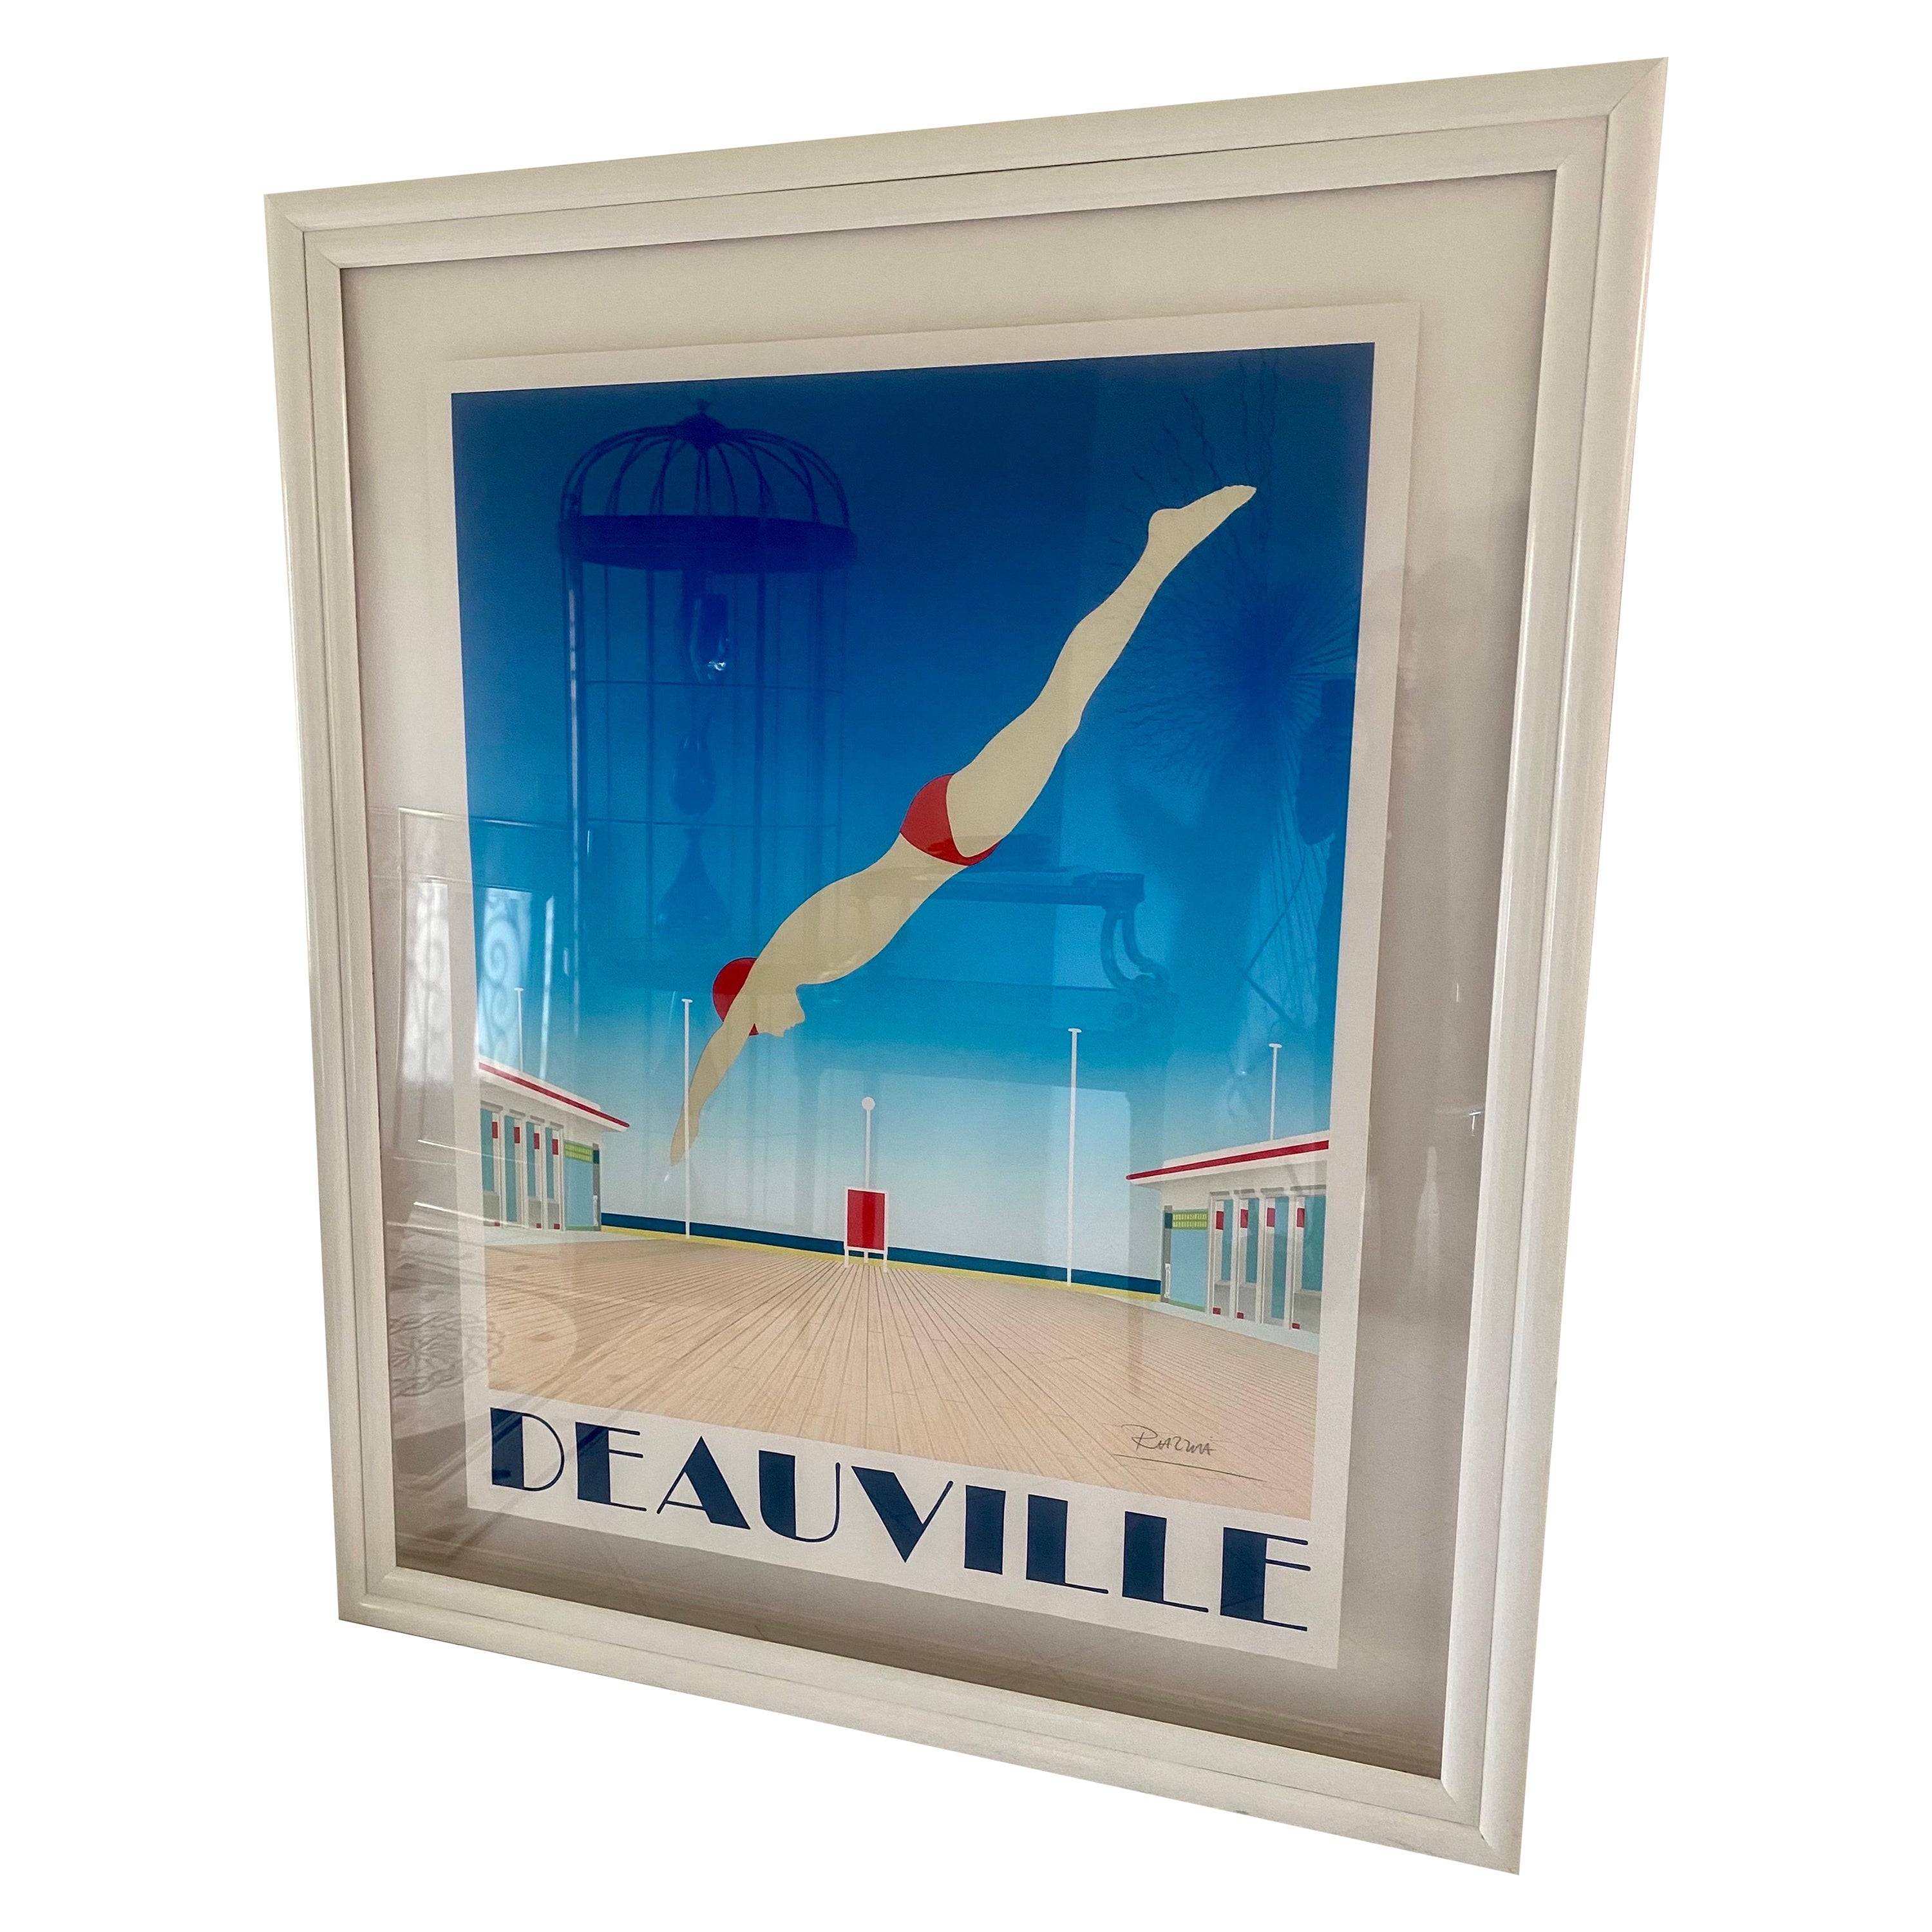 Originales, handsigniertes, gerahmtes Razzia-Poster, Deauville, Art déco